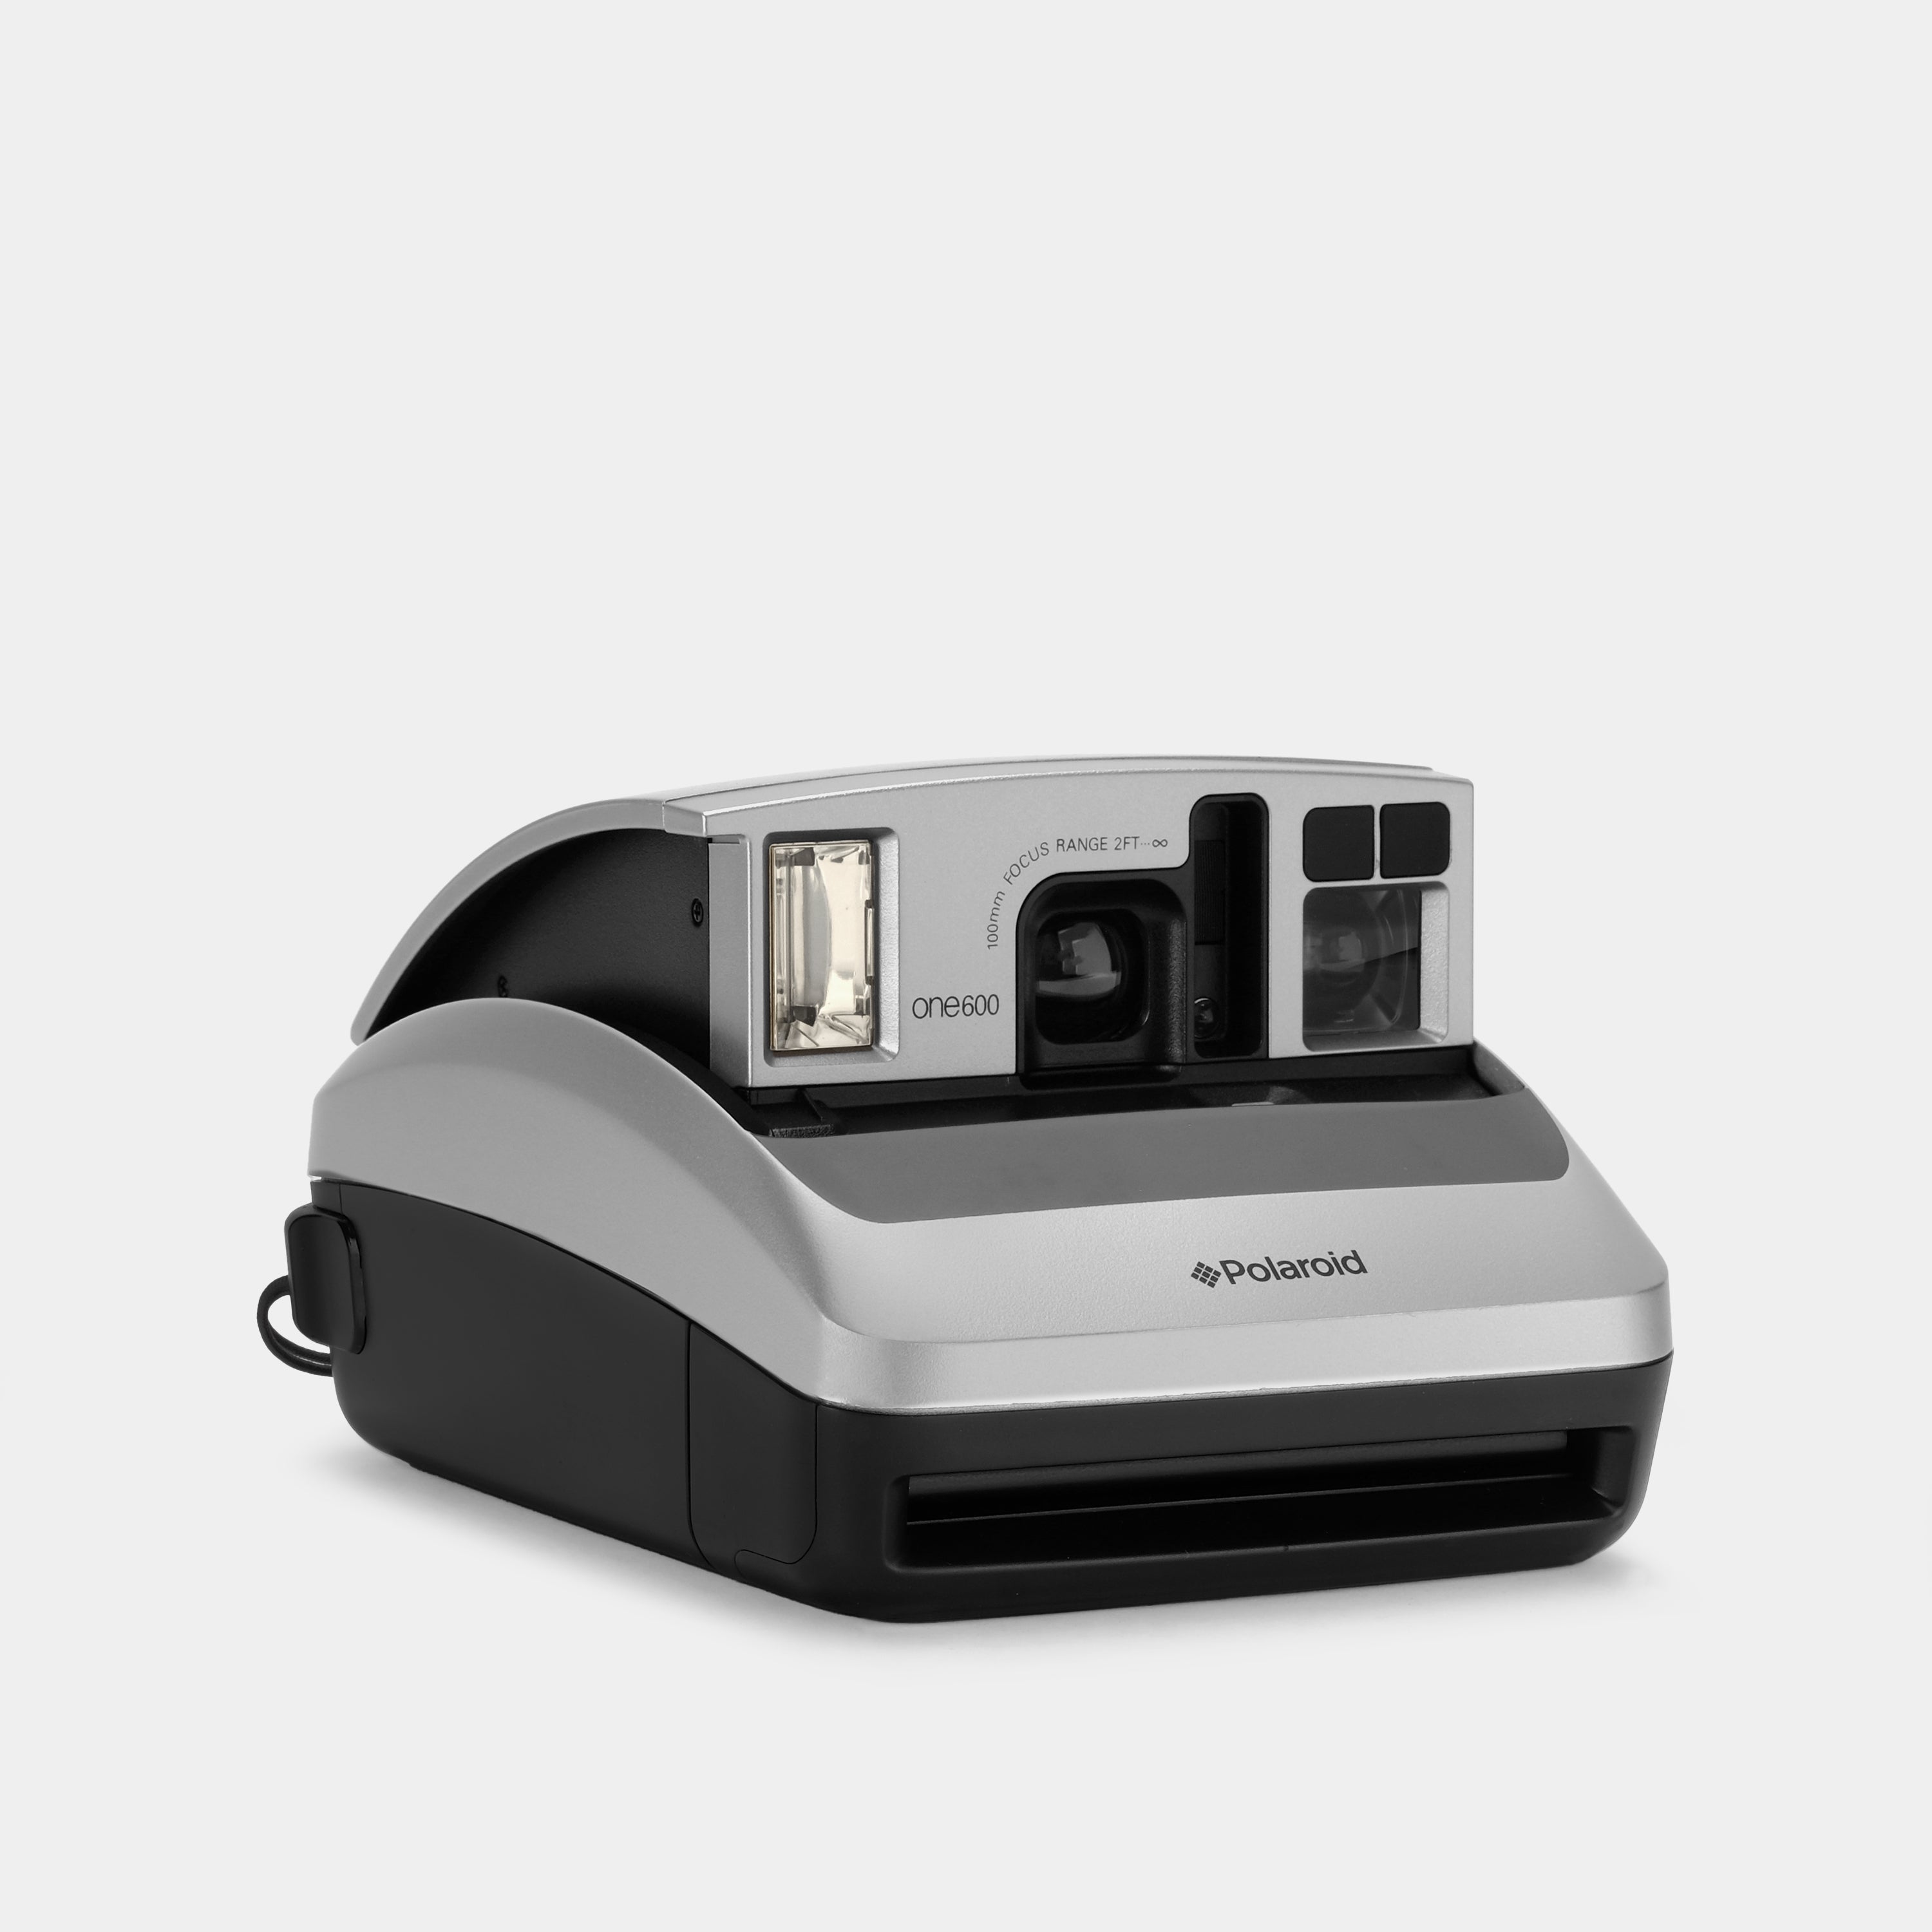 Polaroid 600 One600 Black and Silver Instant Film Camera